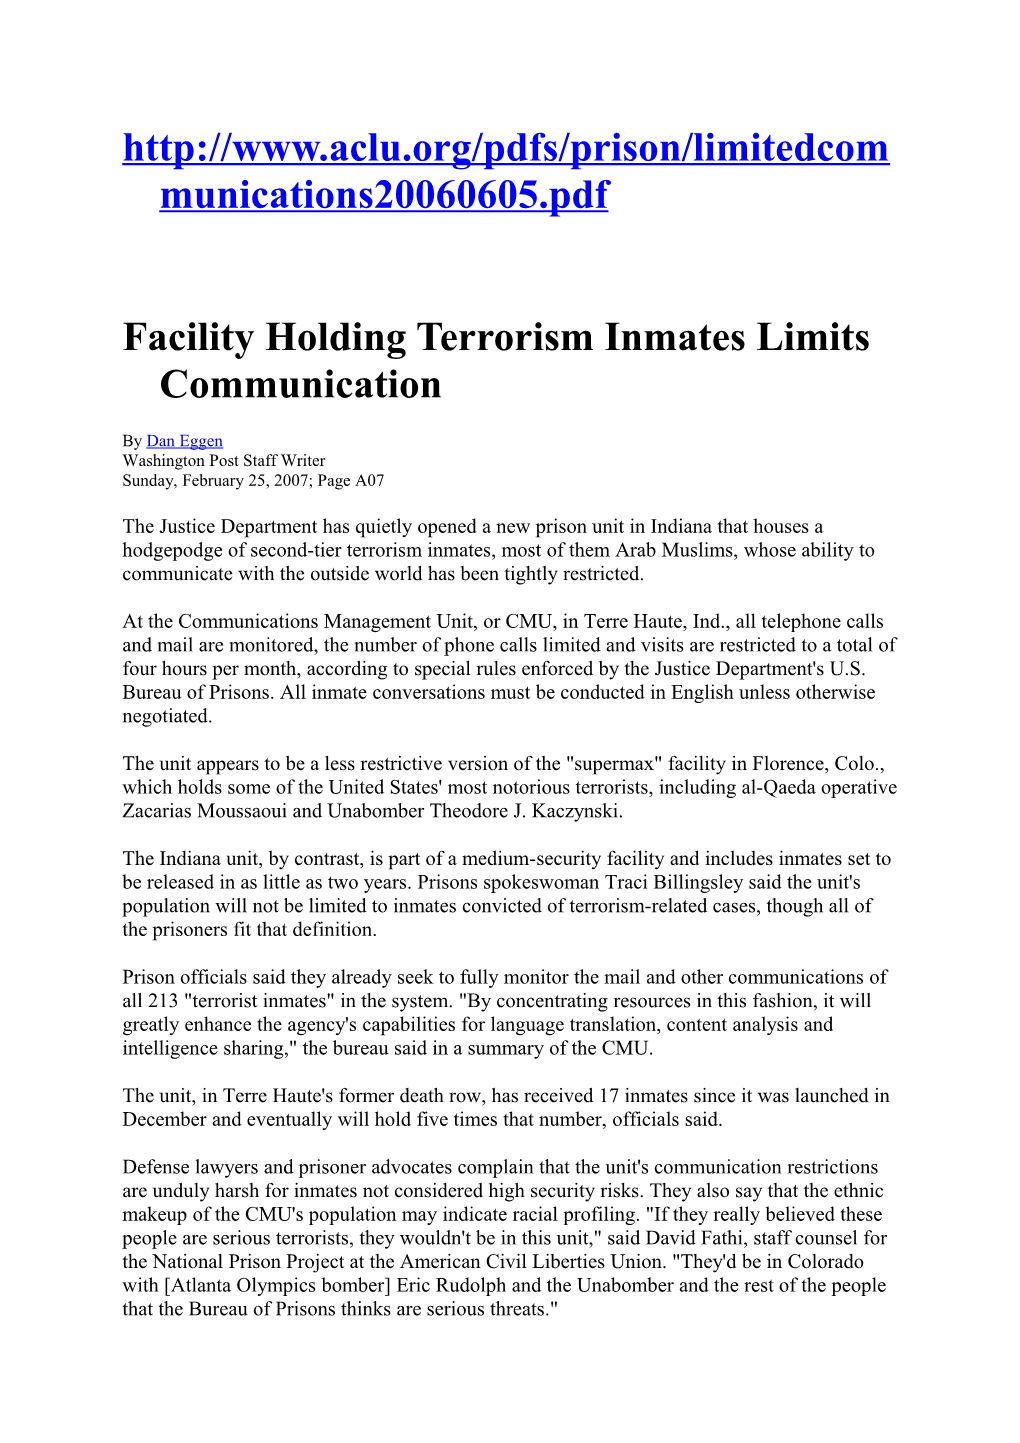 Facility Holding Terrorism Inmates Limits Communication